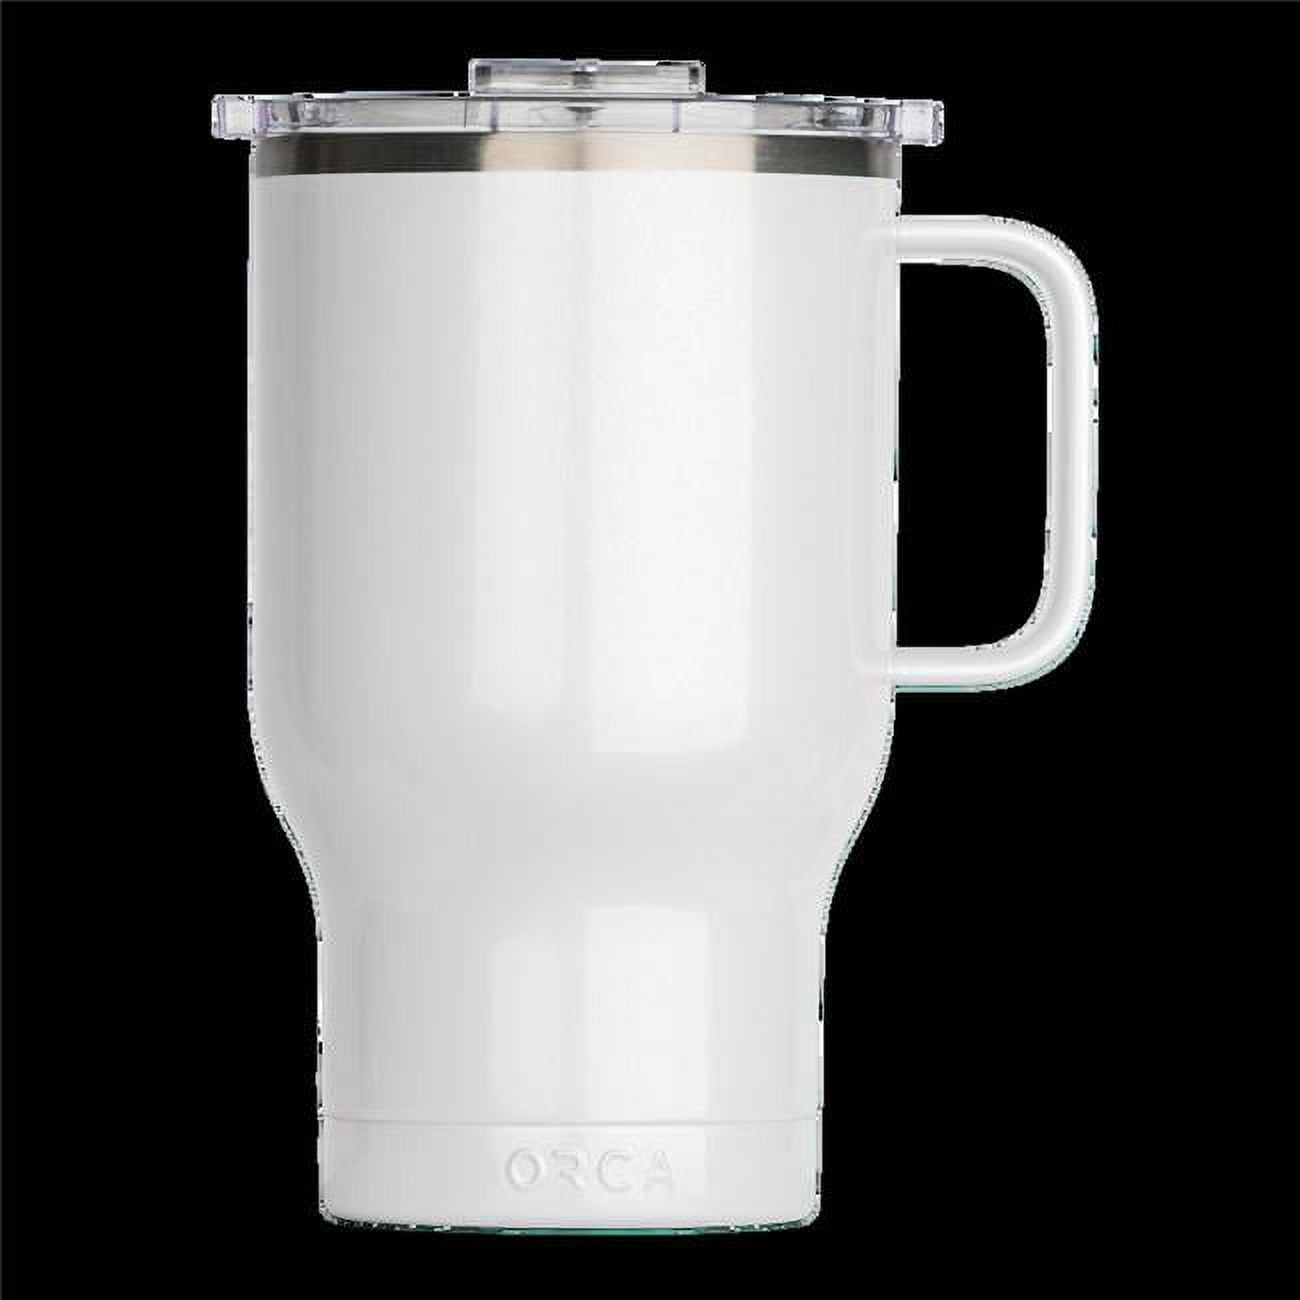 15 oz. Orca Stainless Steel Coffee Mug - White